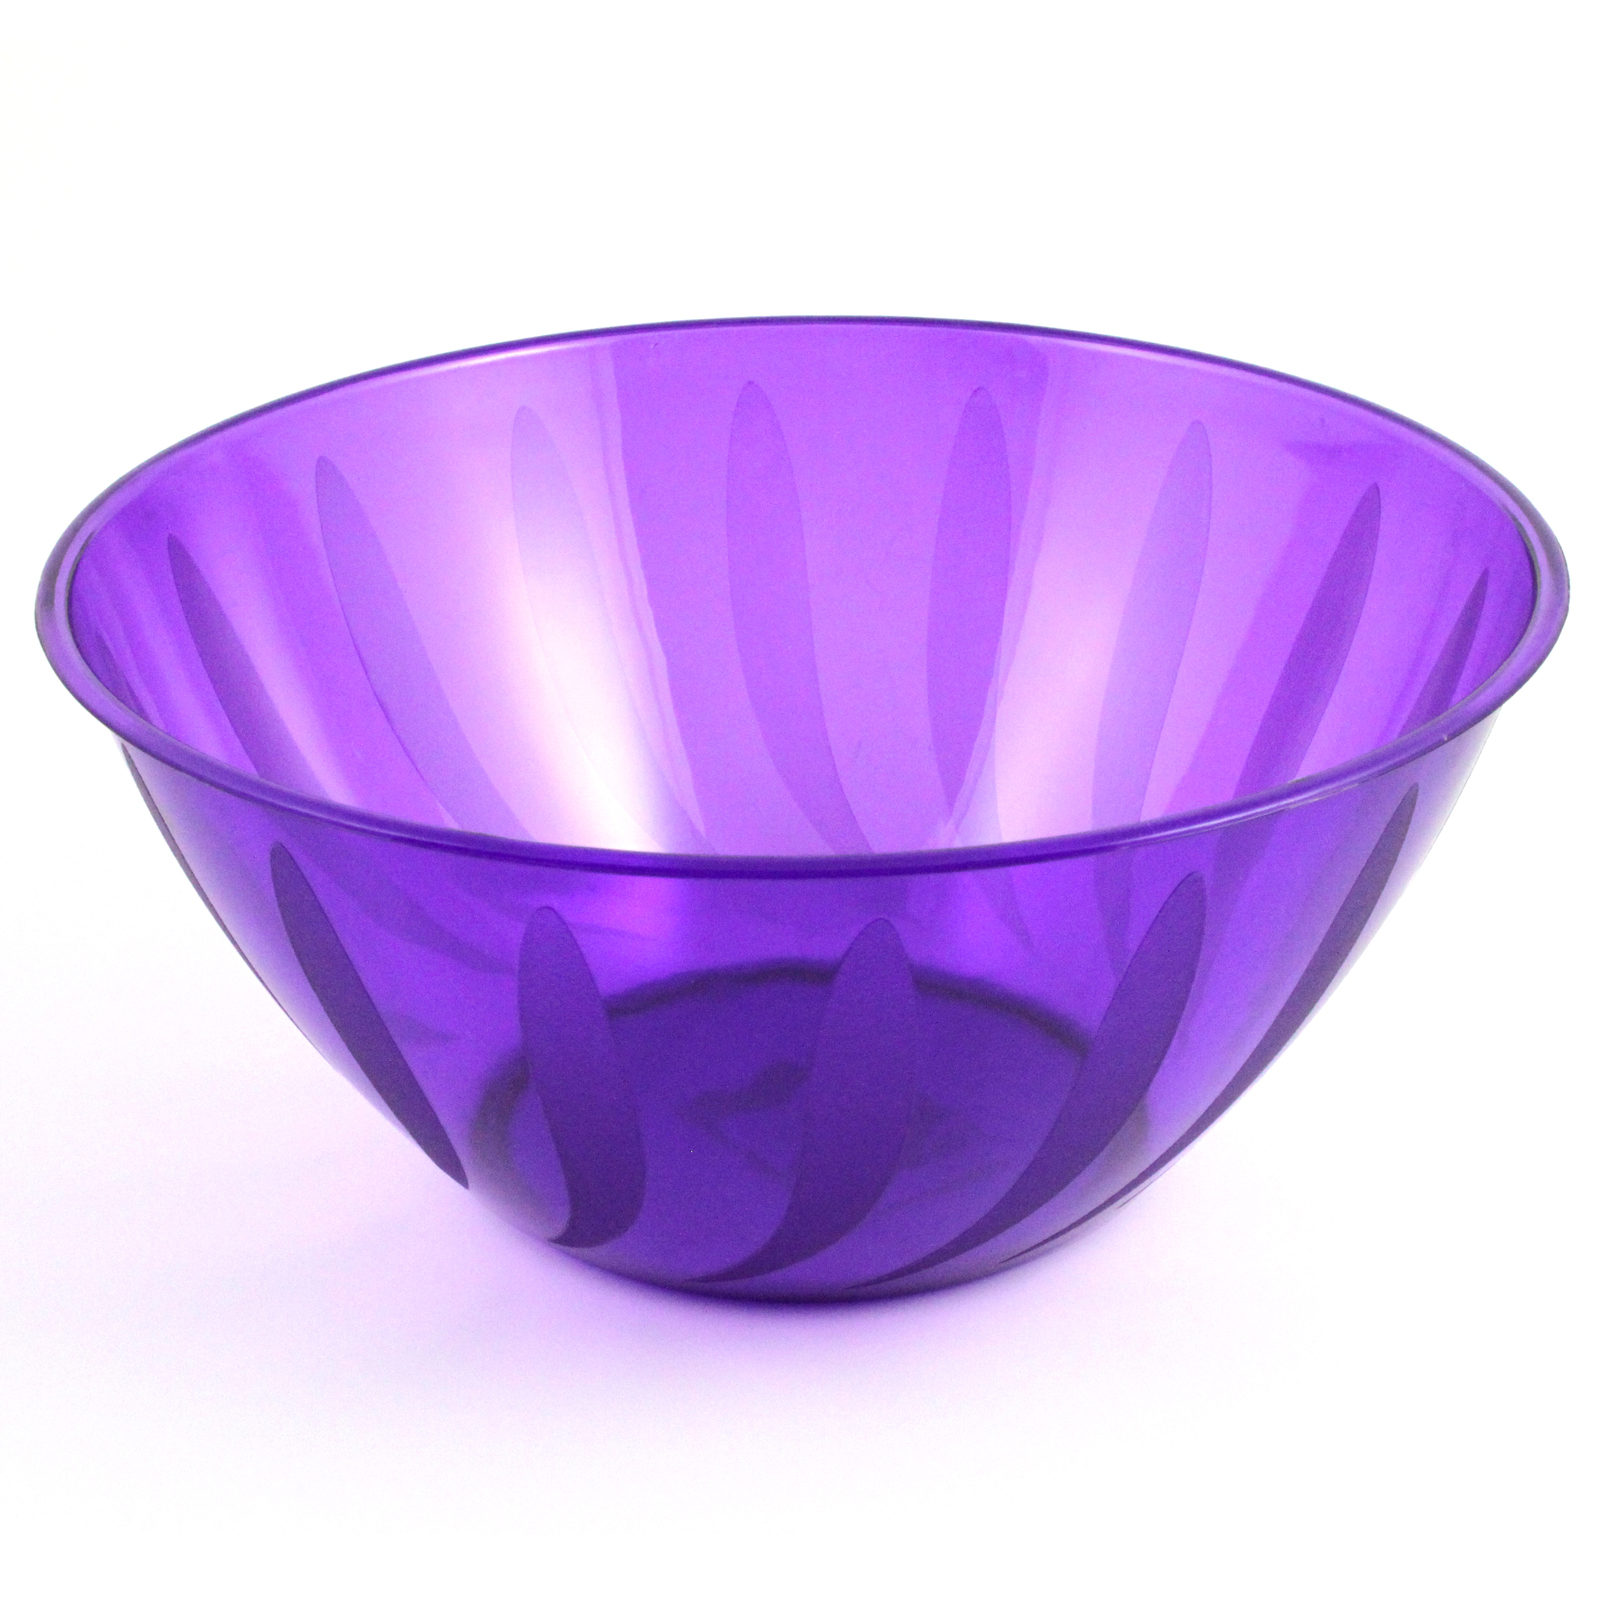 164 oz. Swirls Large Bowl Plastic Cups, Utensils, Bowls